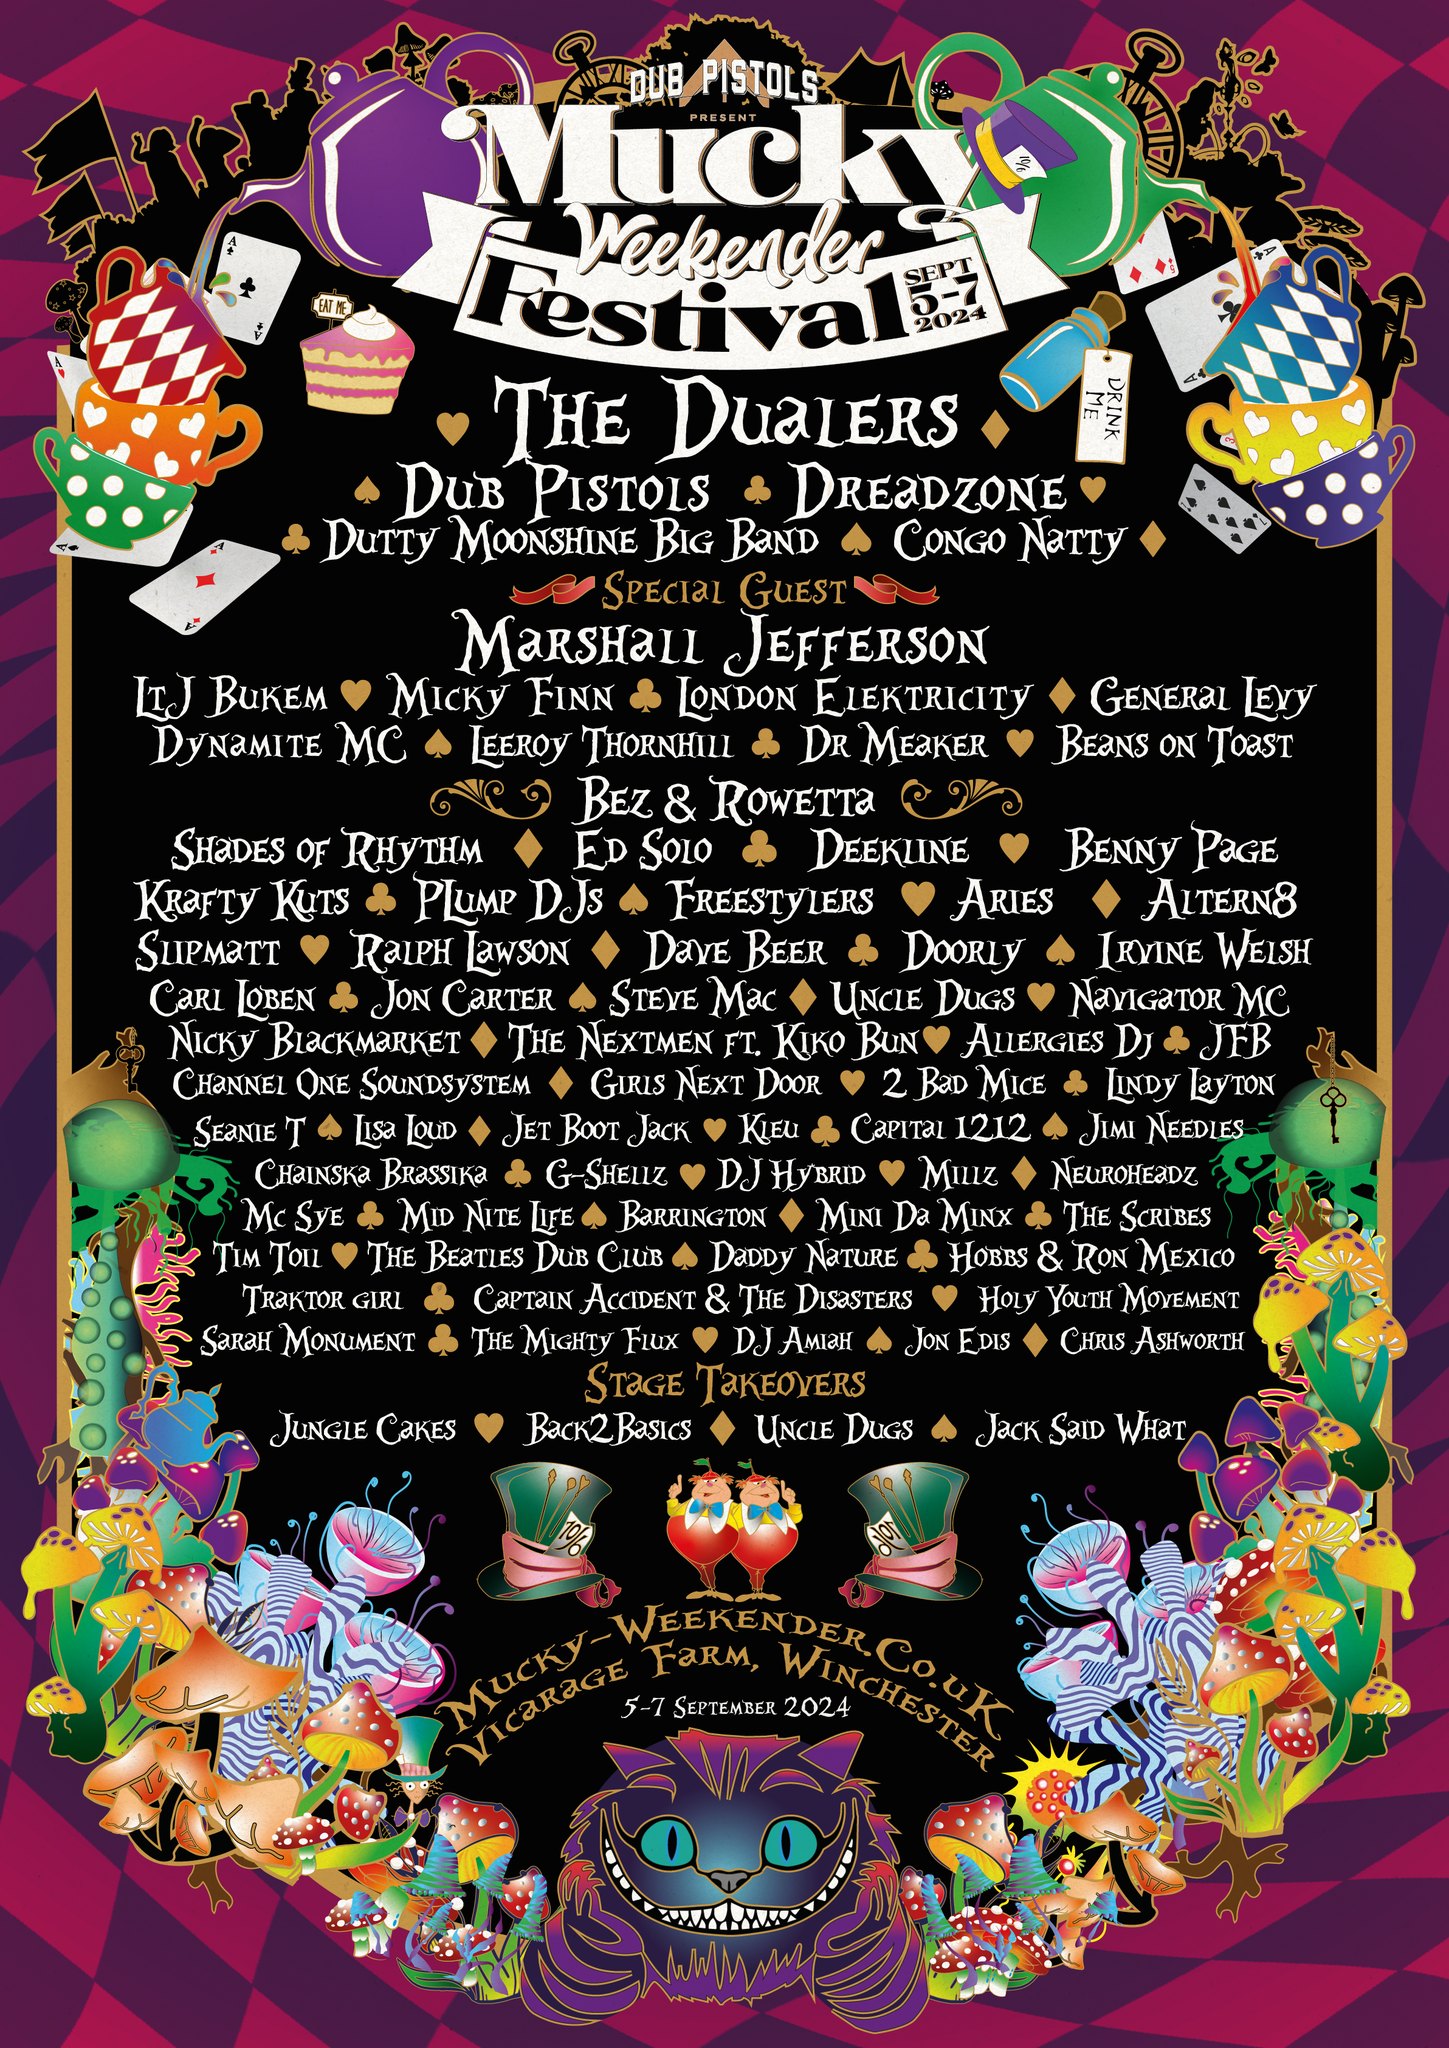 Mucky Weekender Festival: The Dualers, Dreadzone, Dutty Moonshine Big Band, Congo Natty, Marshall Jefferson, LTJ Bukem, General Levy, Bez & Rowetta, Beans on Toast, Irvine Welsh + many more!